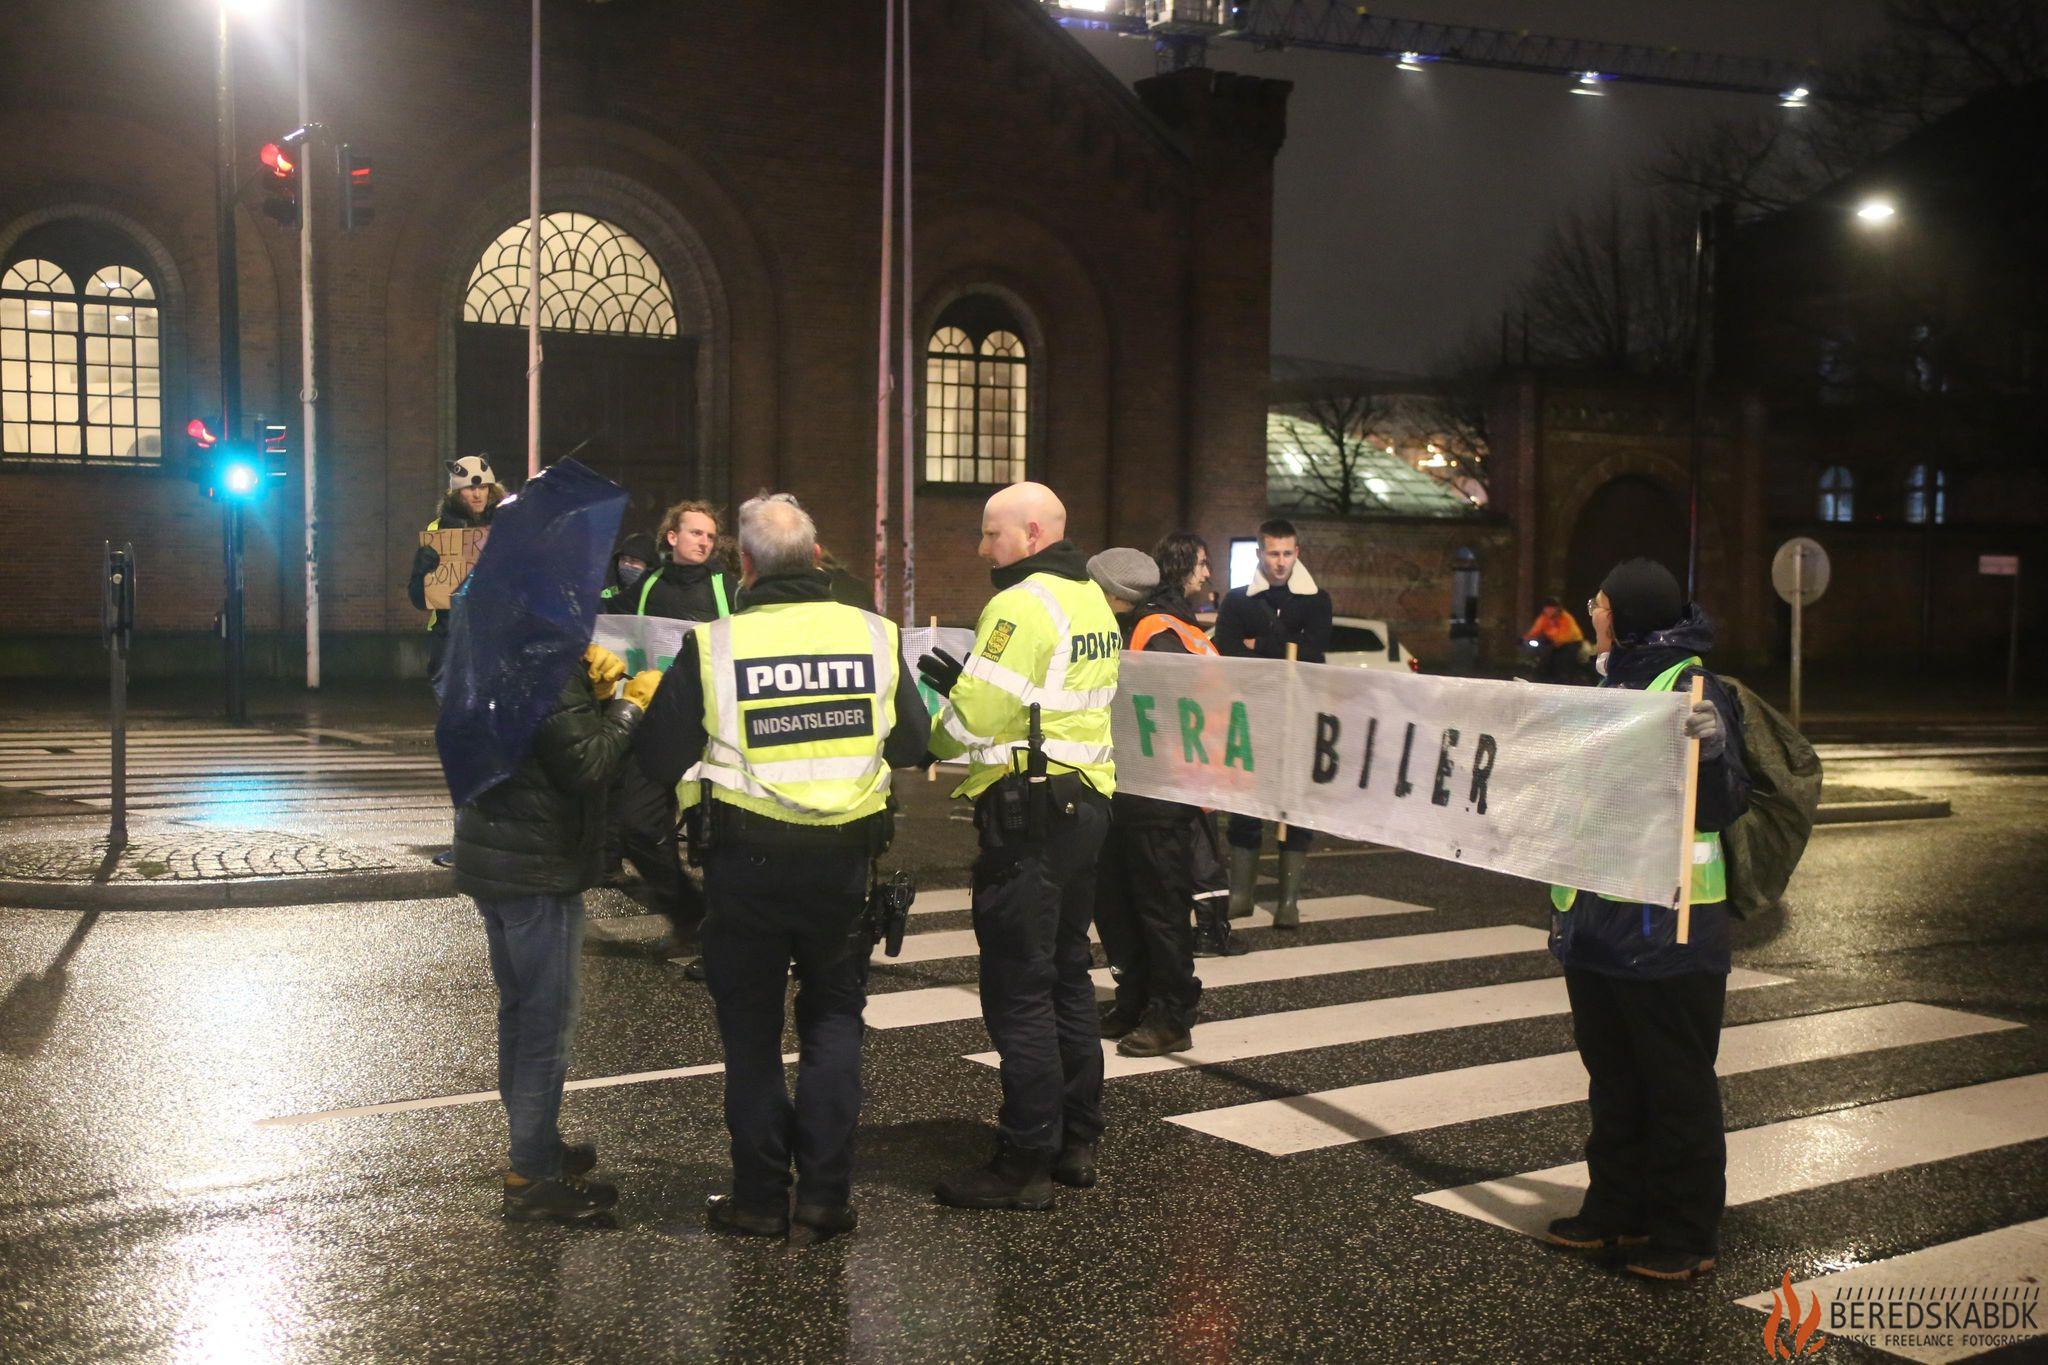 19/11-23 Klimademonstration Blokerer Frederiks Alle i Aarhus